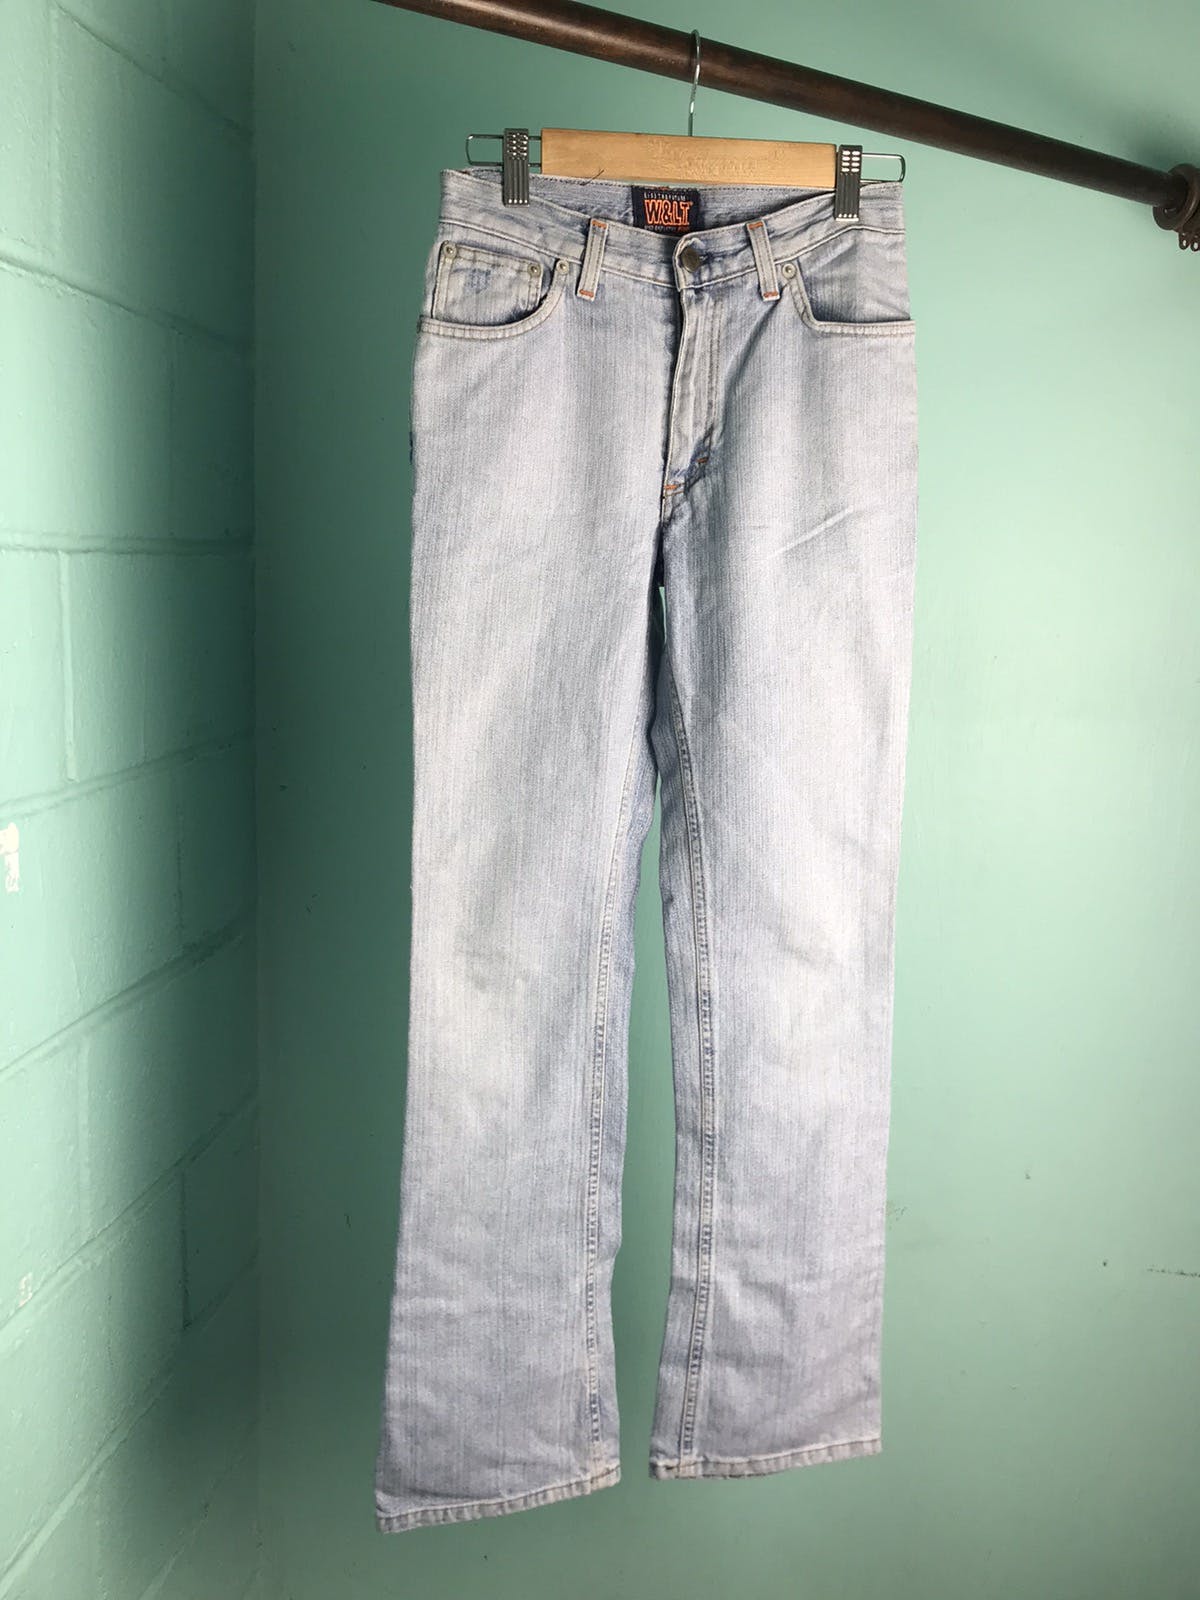 Vintage W&lt Denim Jeans - 3